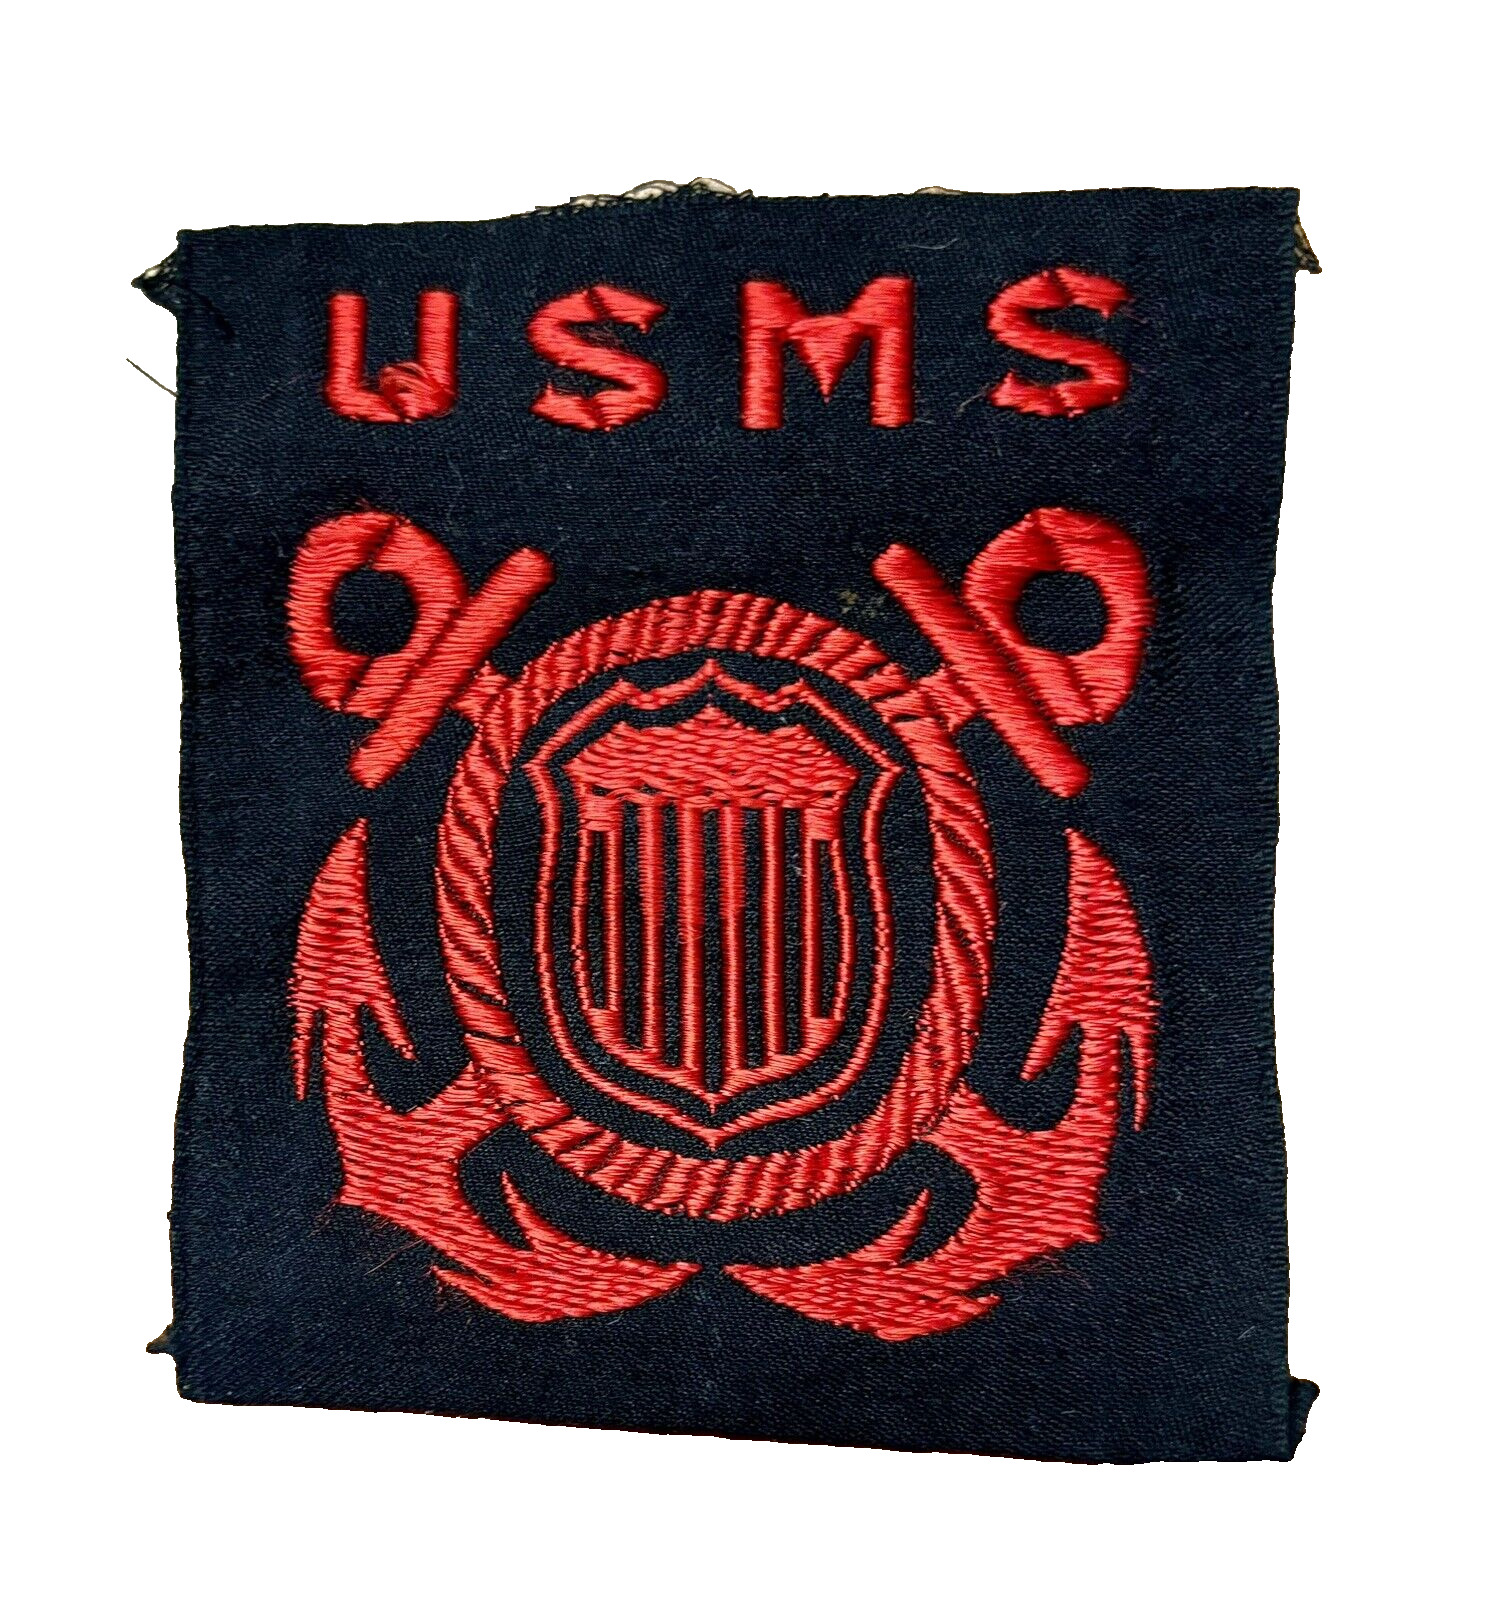 Vintage WW2 Original USMS United States Maritime Service Patch